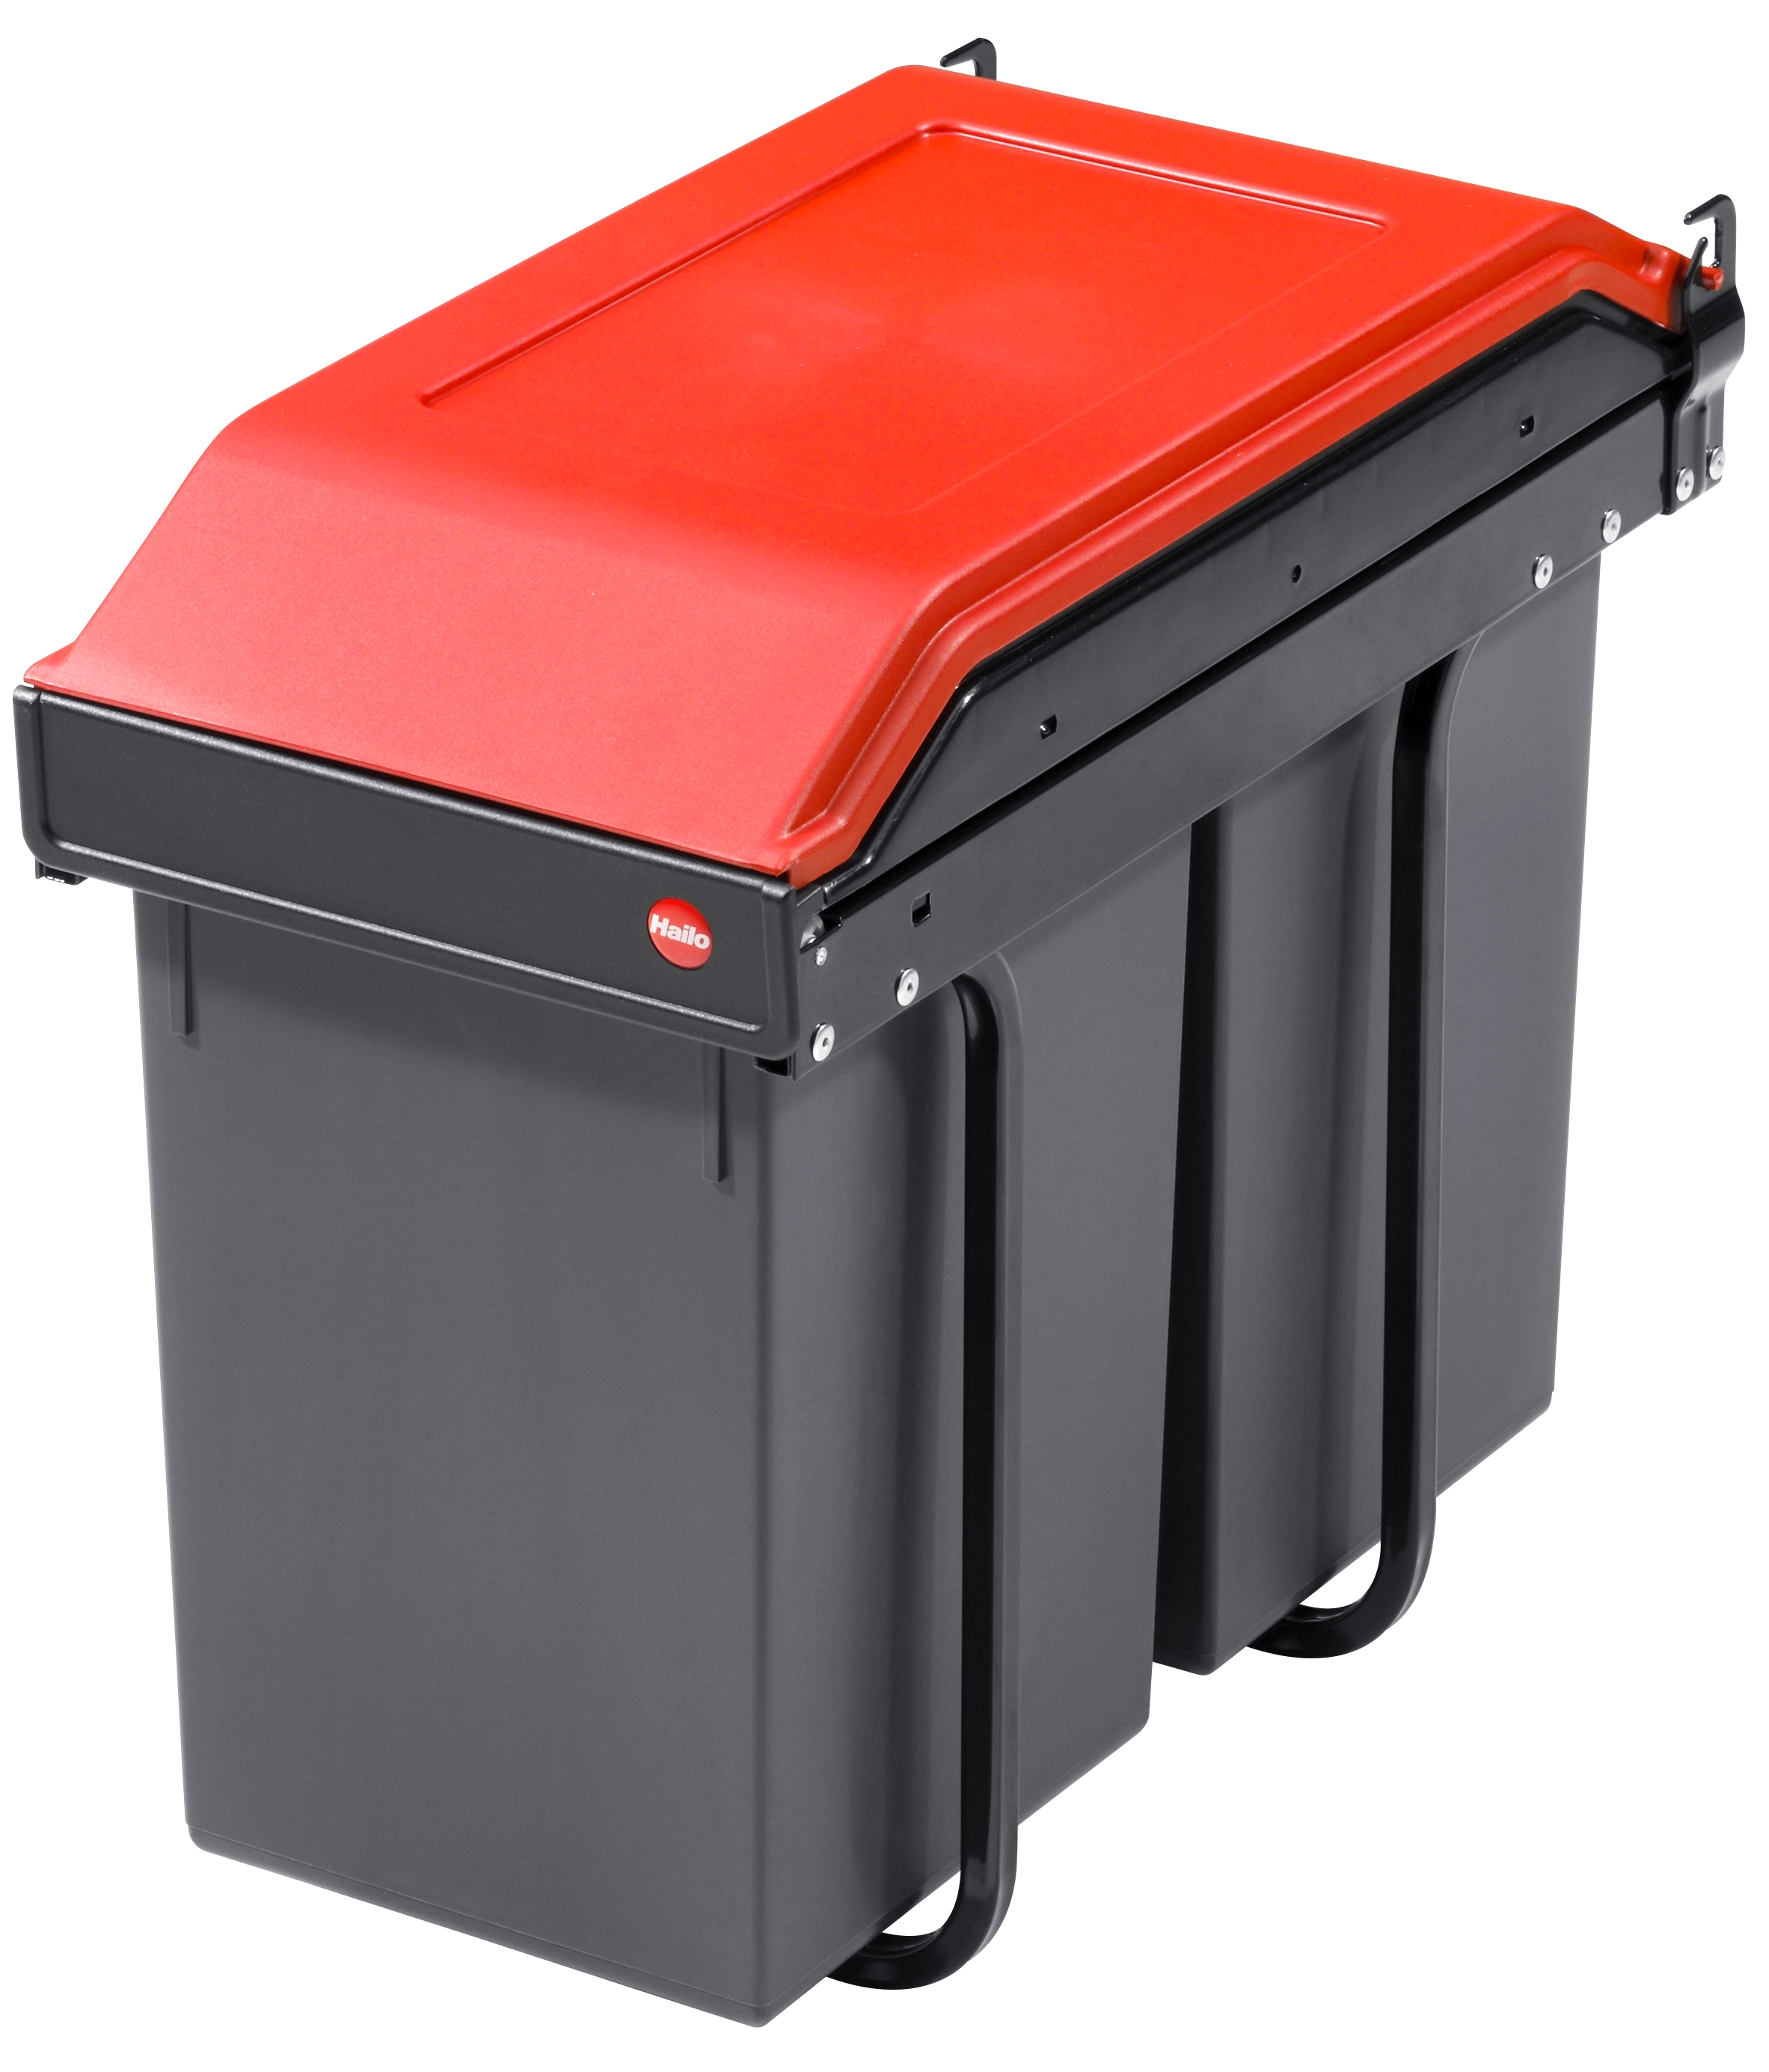 Hailo Einbau-Mülleimer Multi Box 2 x 14 l kaufen bei OBI